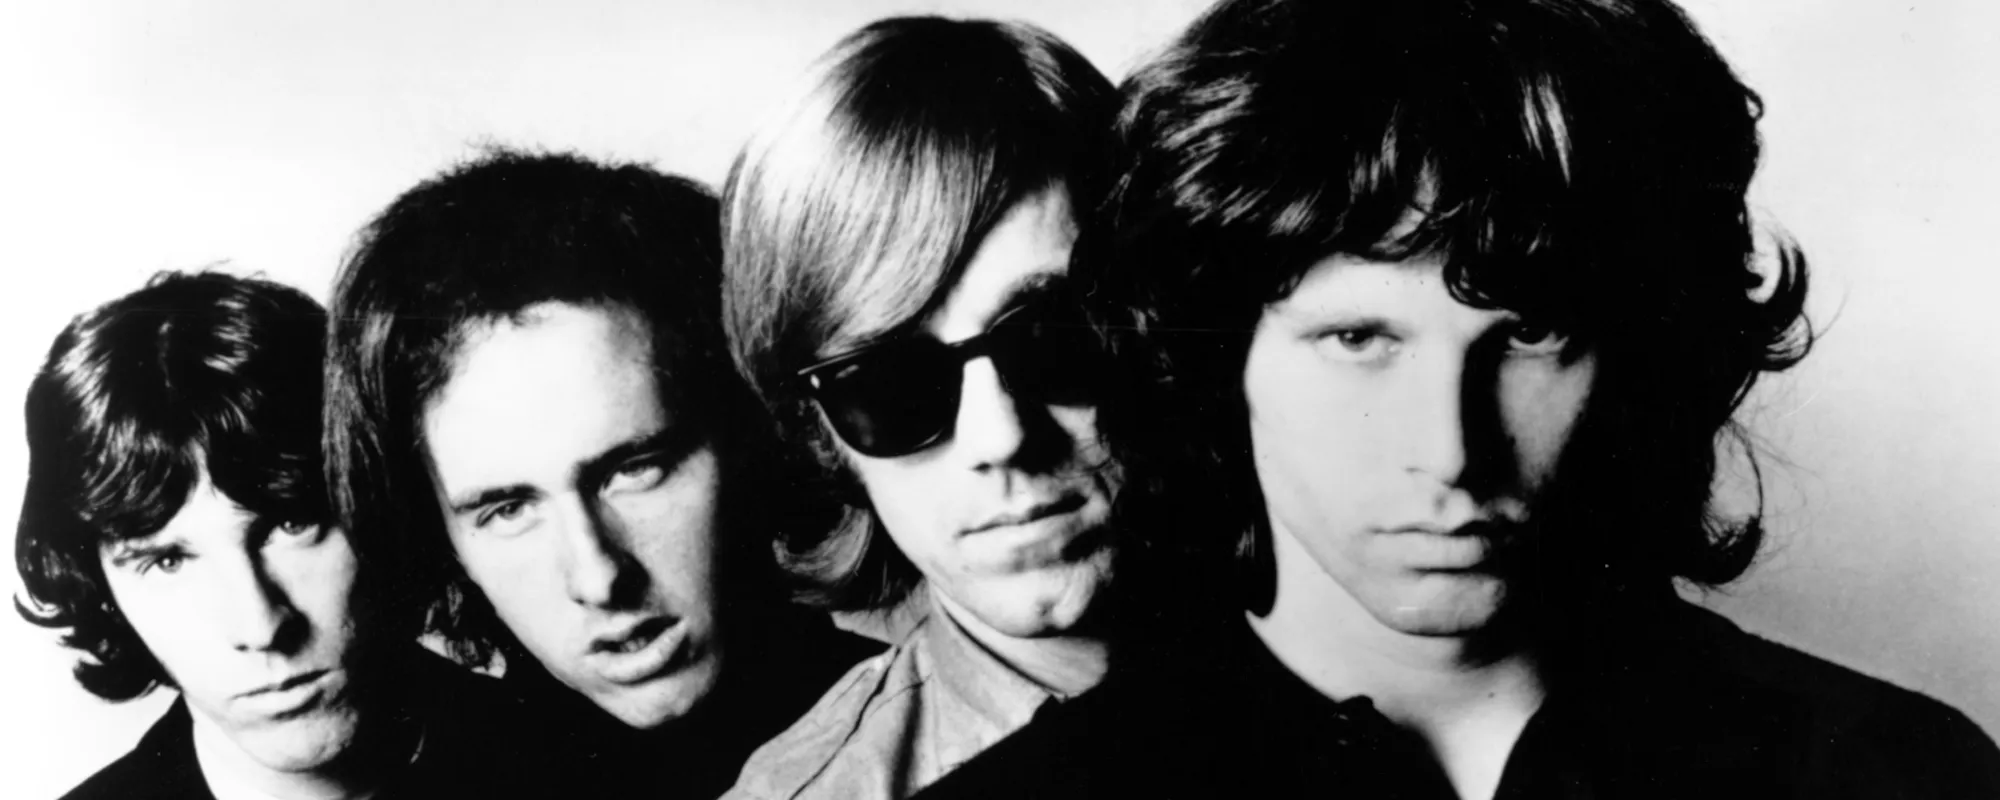 Behind The Song Lyrics: “Strange Days,” The Doors